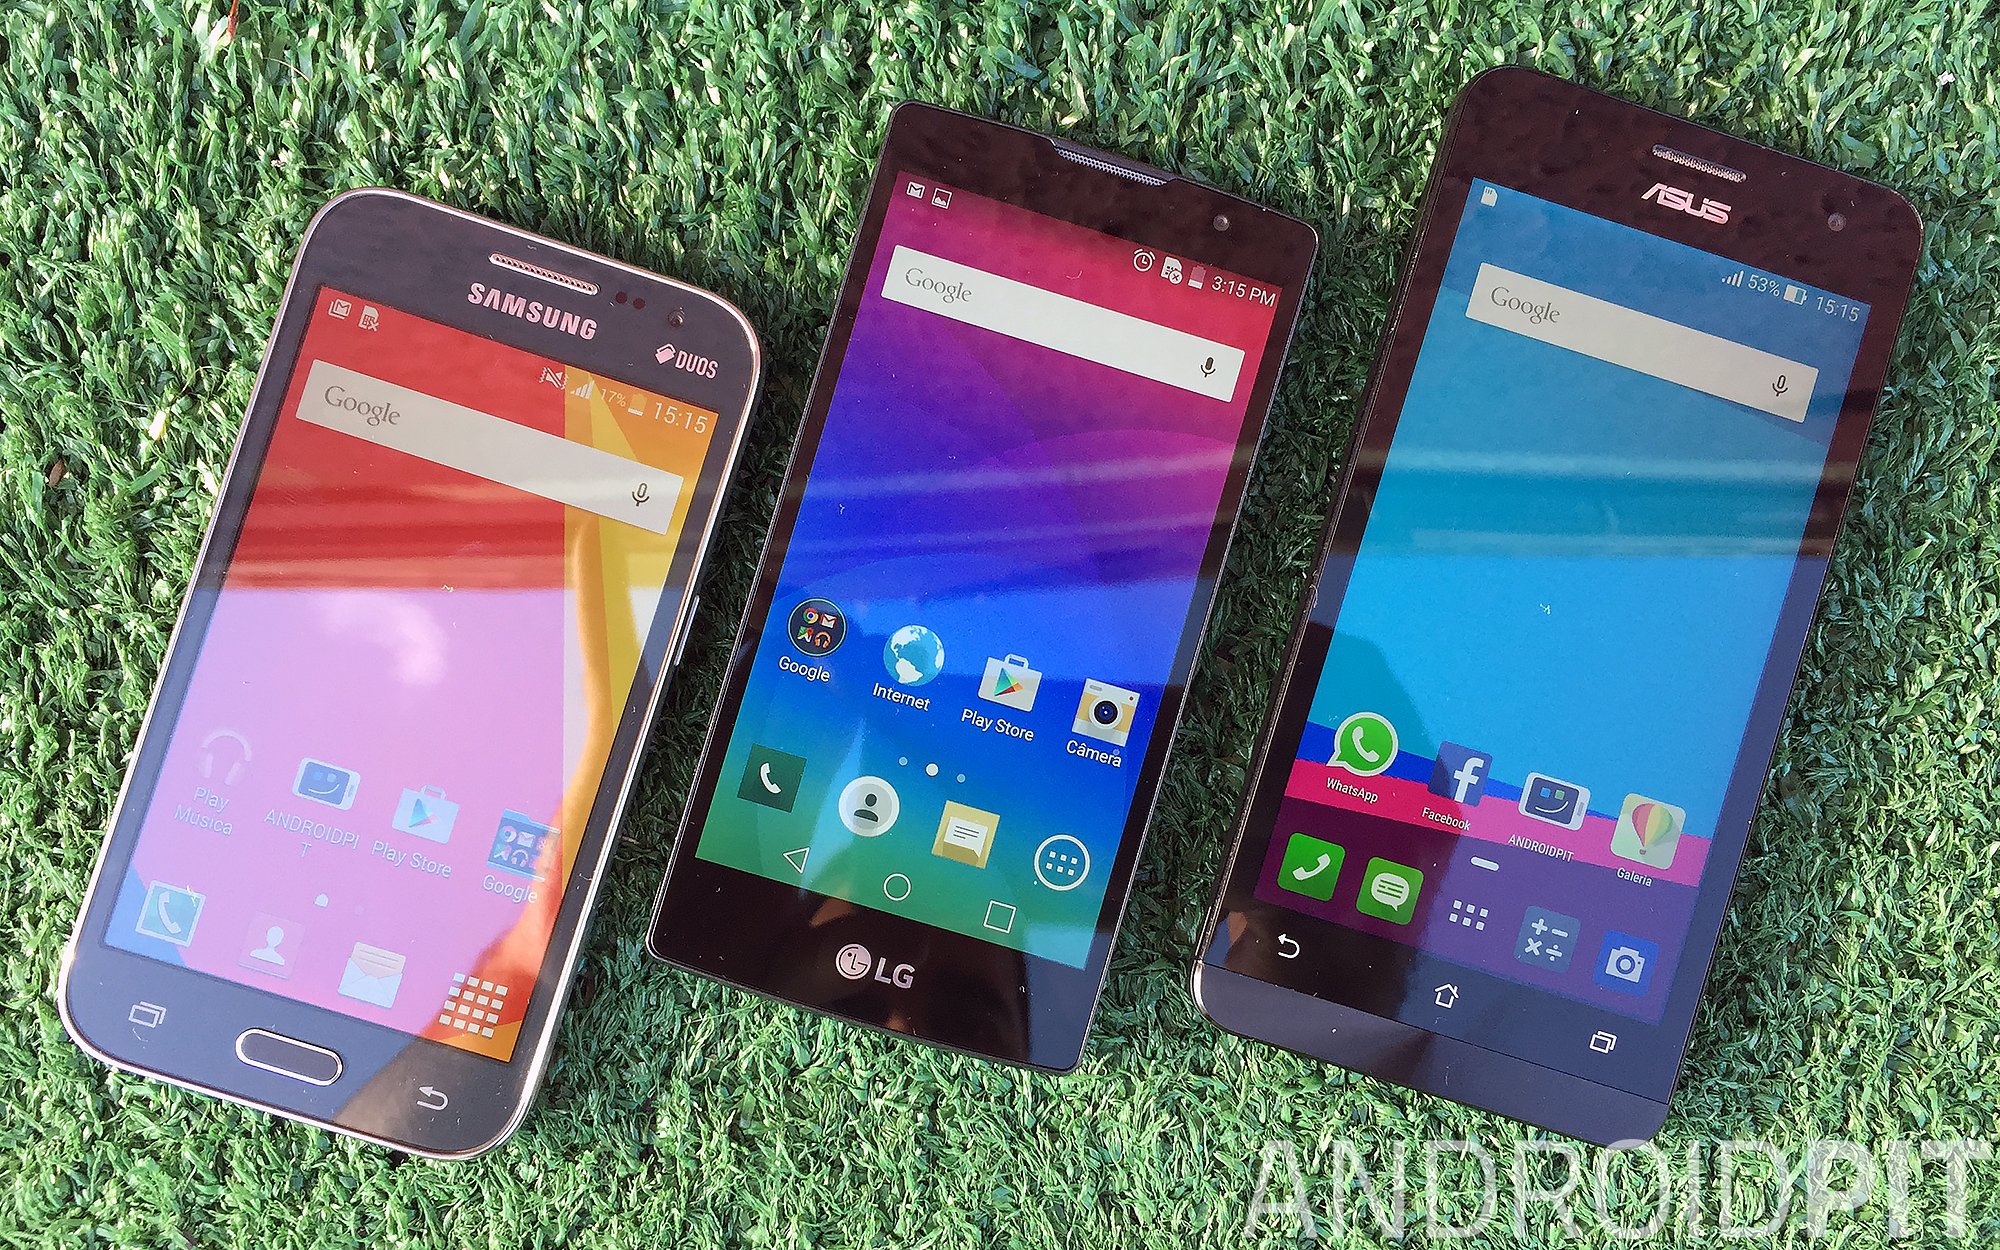 Samsung Galaxy Grand Prime Duos Vs. Asus Zenfone 5 vs. LG Volt: Specs Comparison